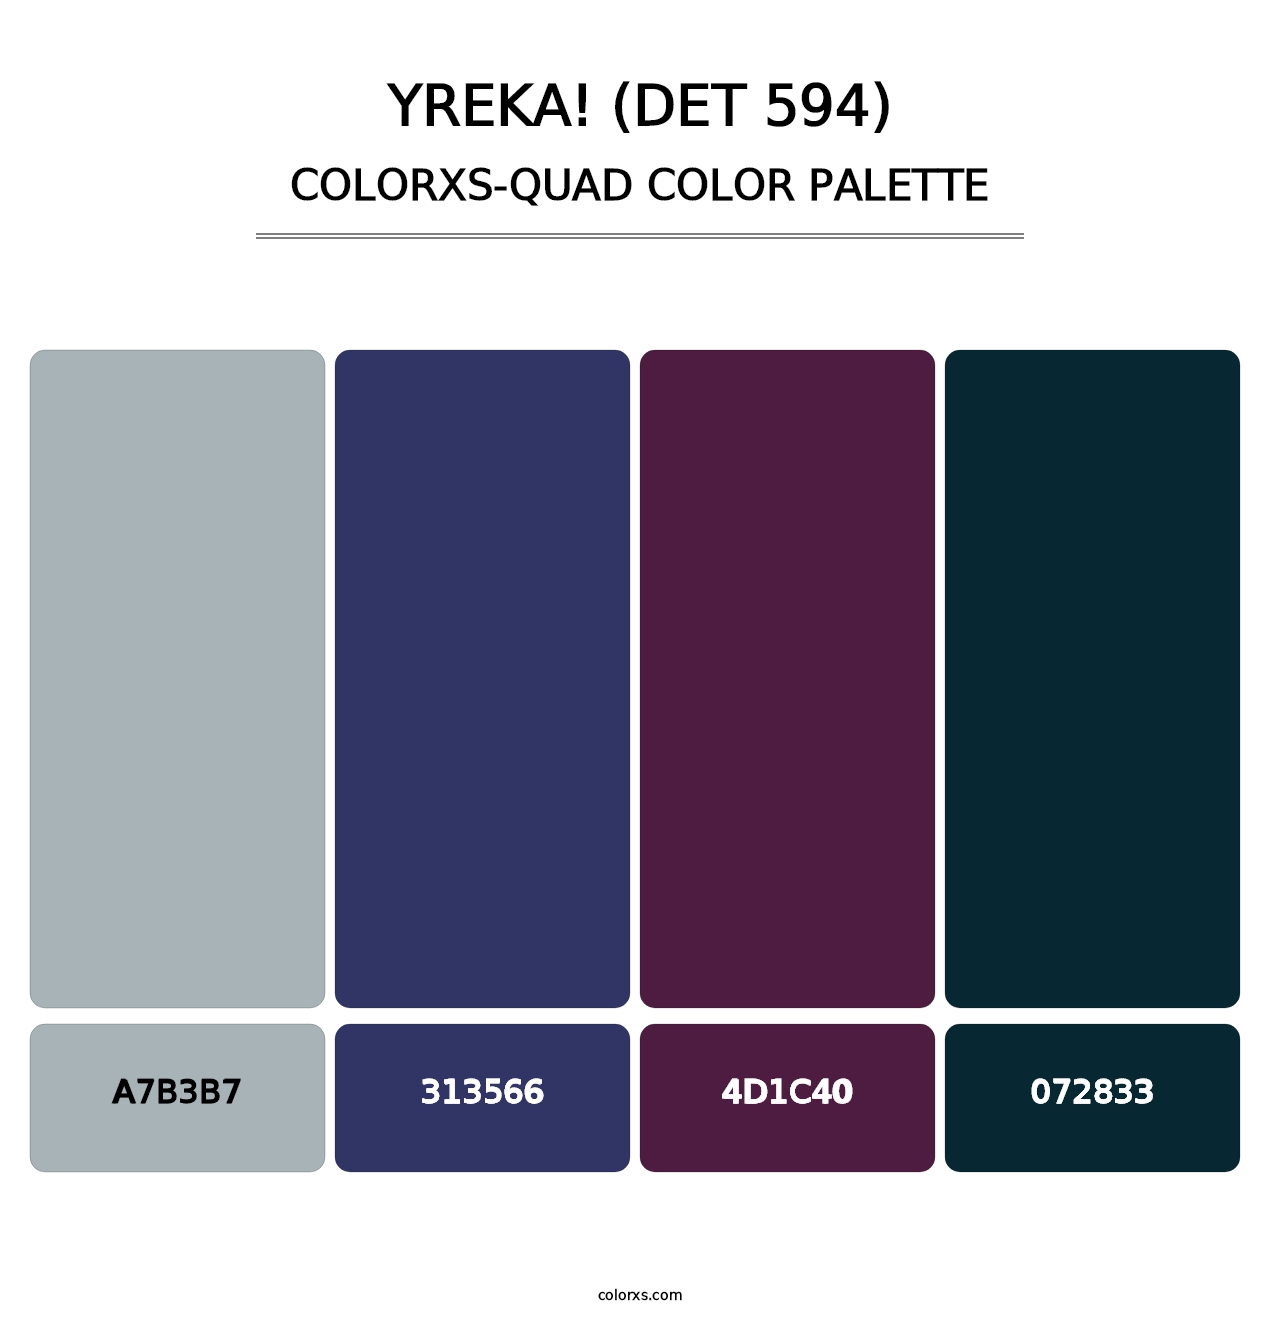 Yreka! (DET 594) - Colorxs Quad Palette